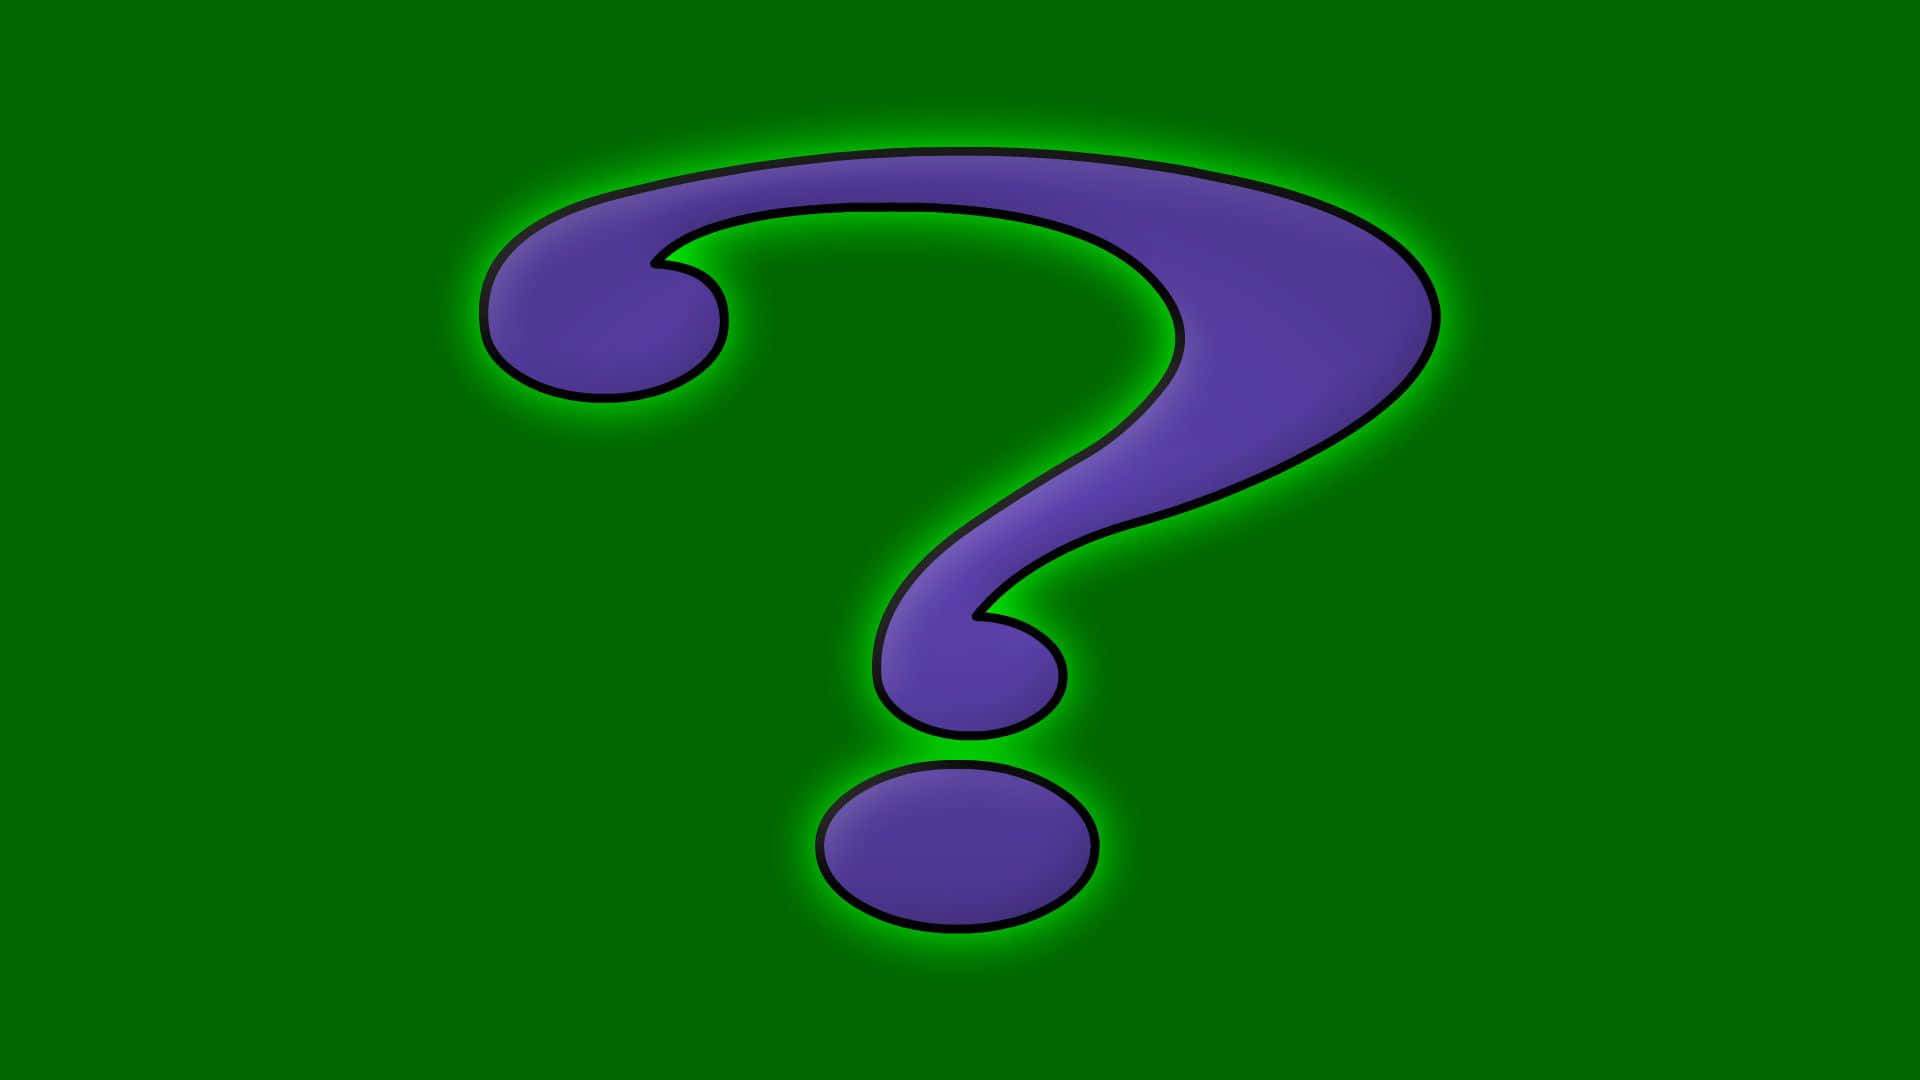 the riddler question mark logo